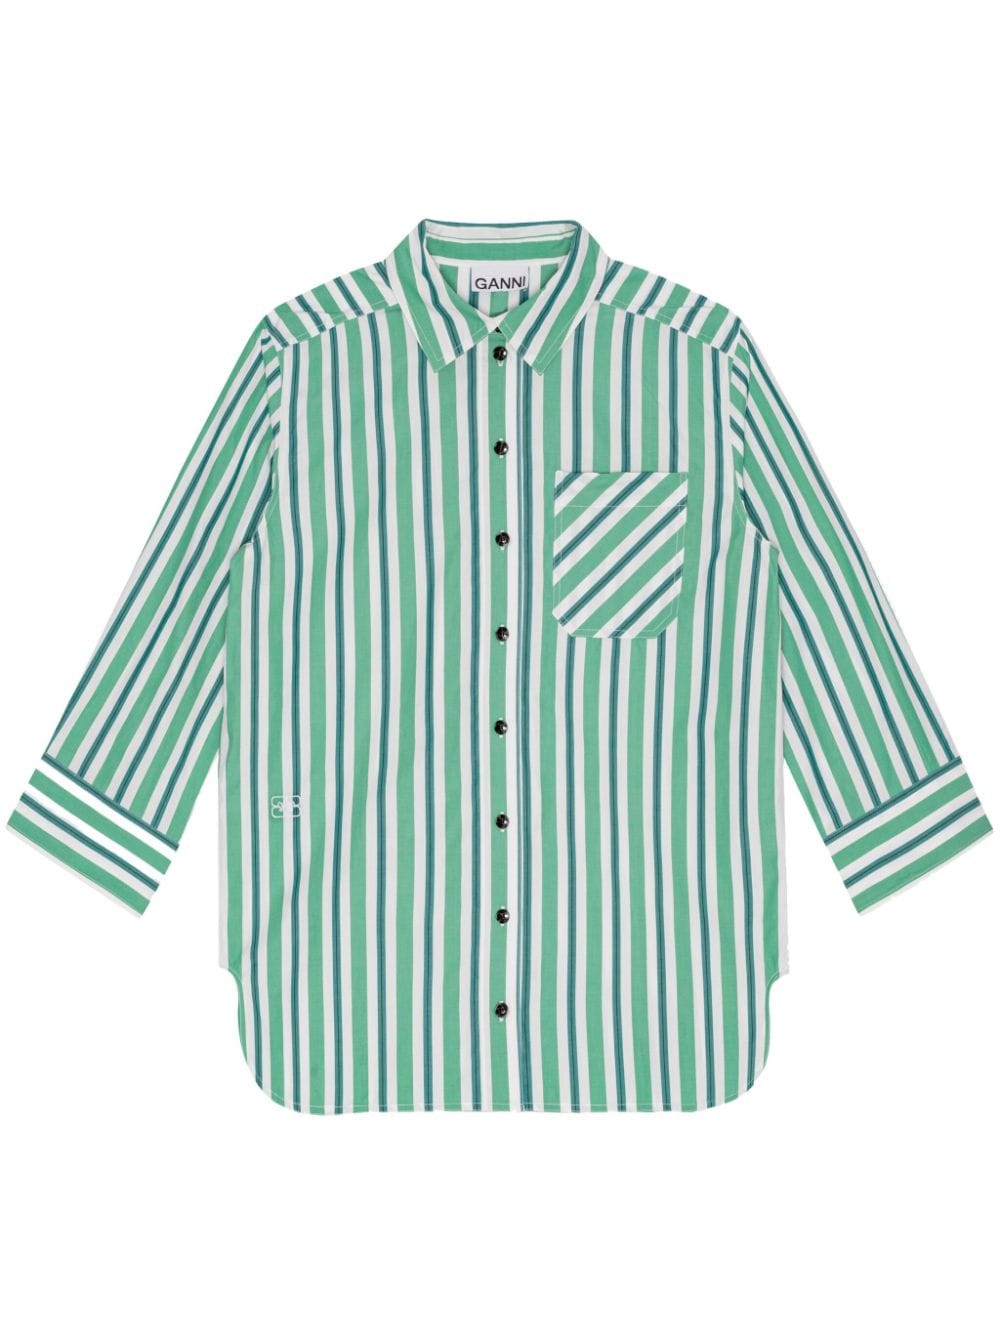 Ganni GANNI- Stripe Cotton Shirt